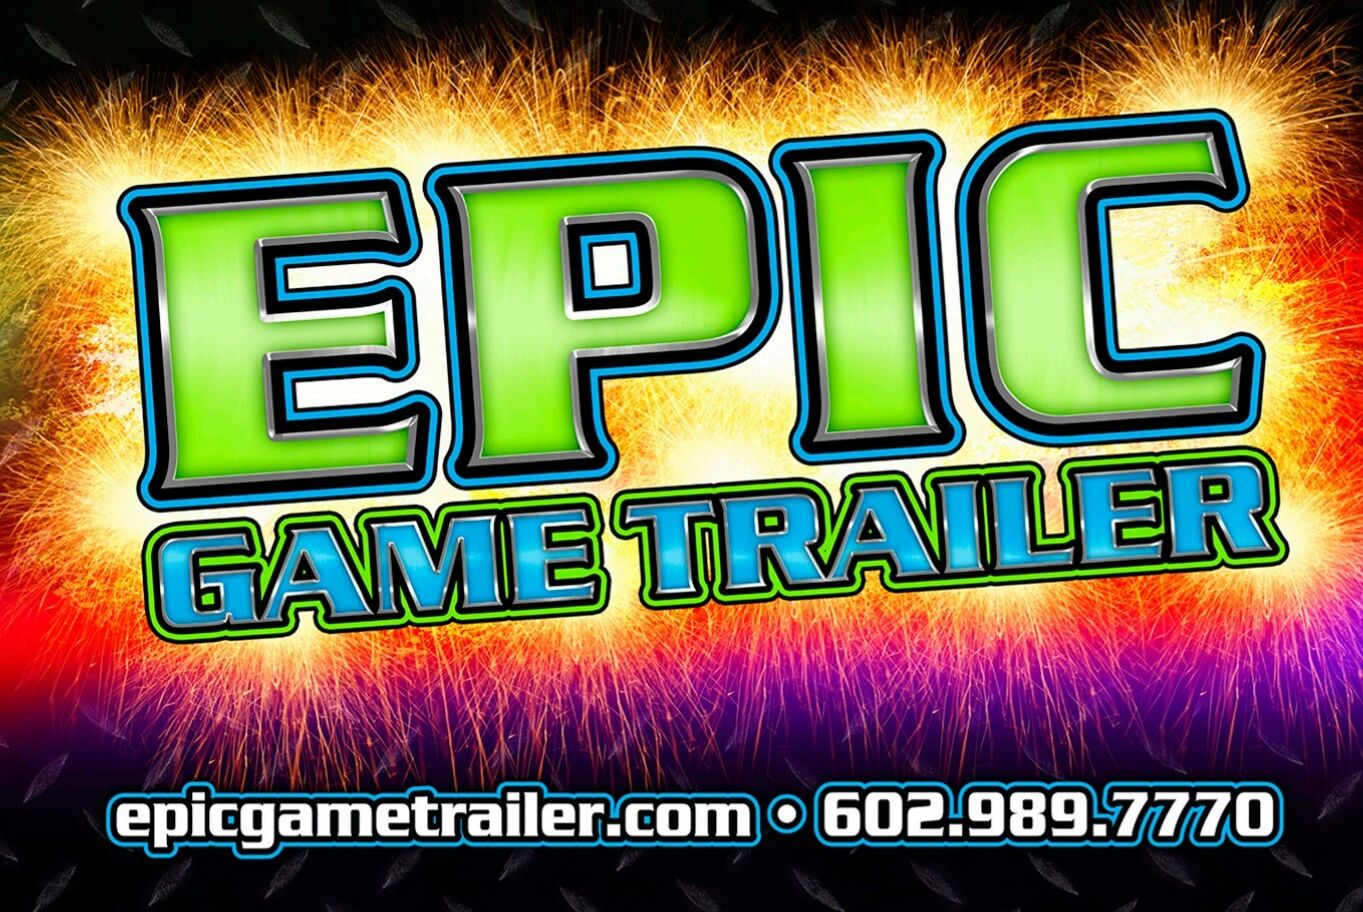 Epic Game Trailer LLC